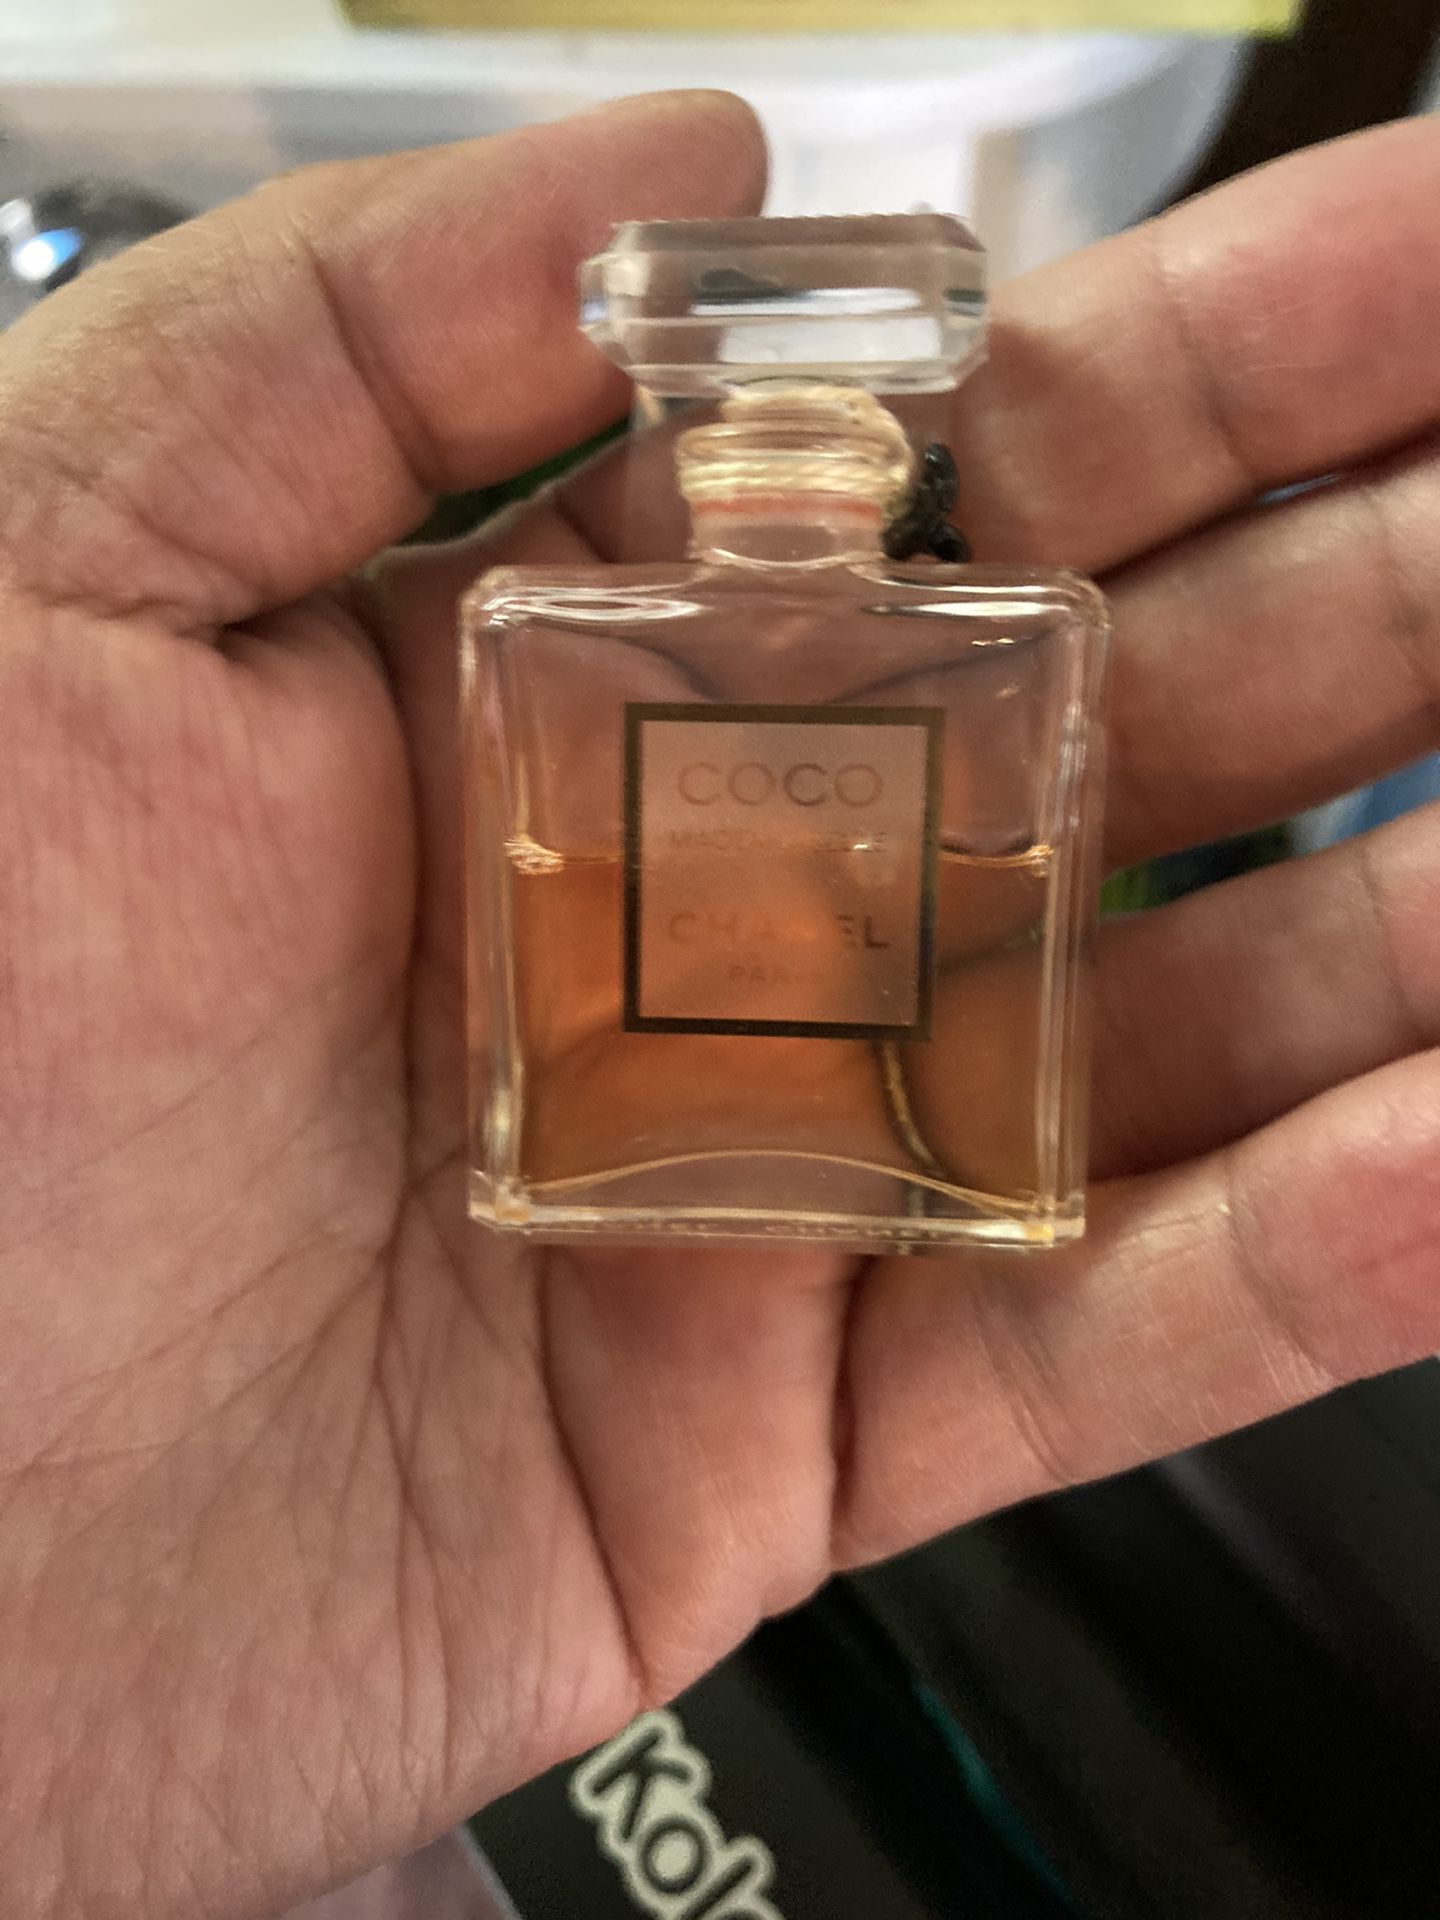 Authentic coco Chanel perfume